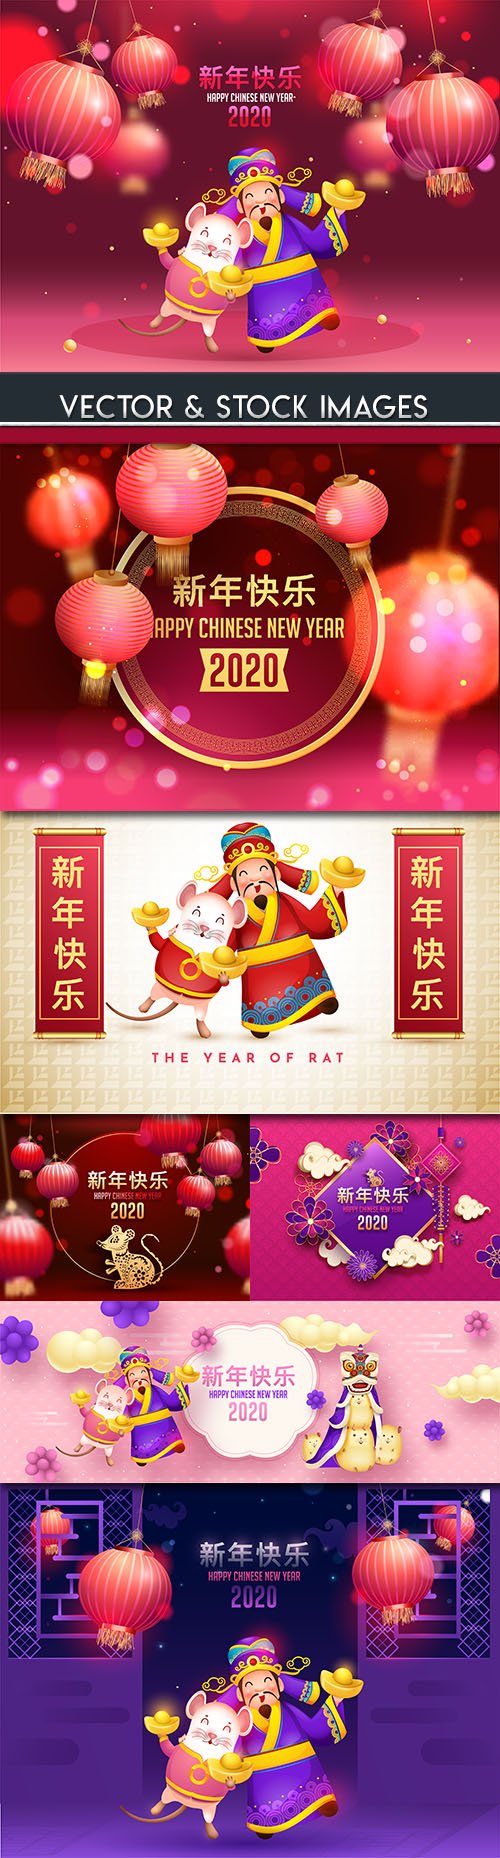 Rat symbol of Chinese New Year 2020 illustration 4